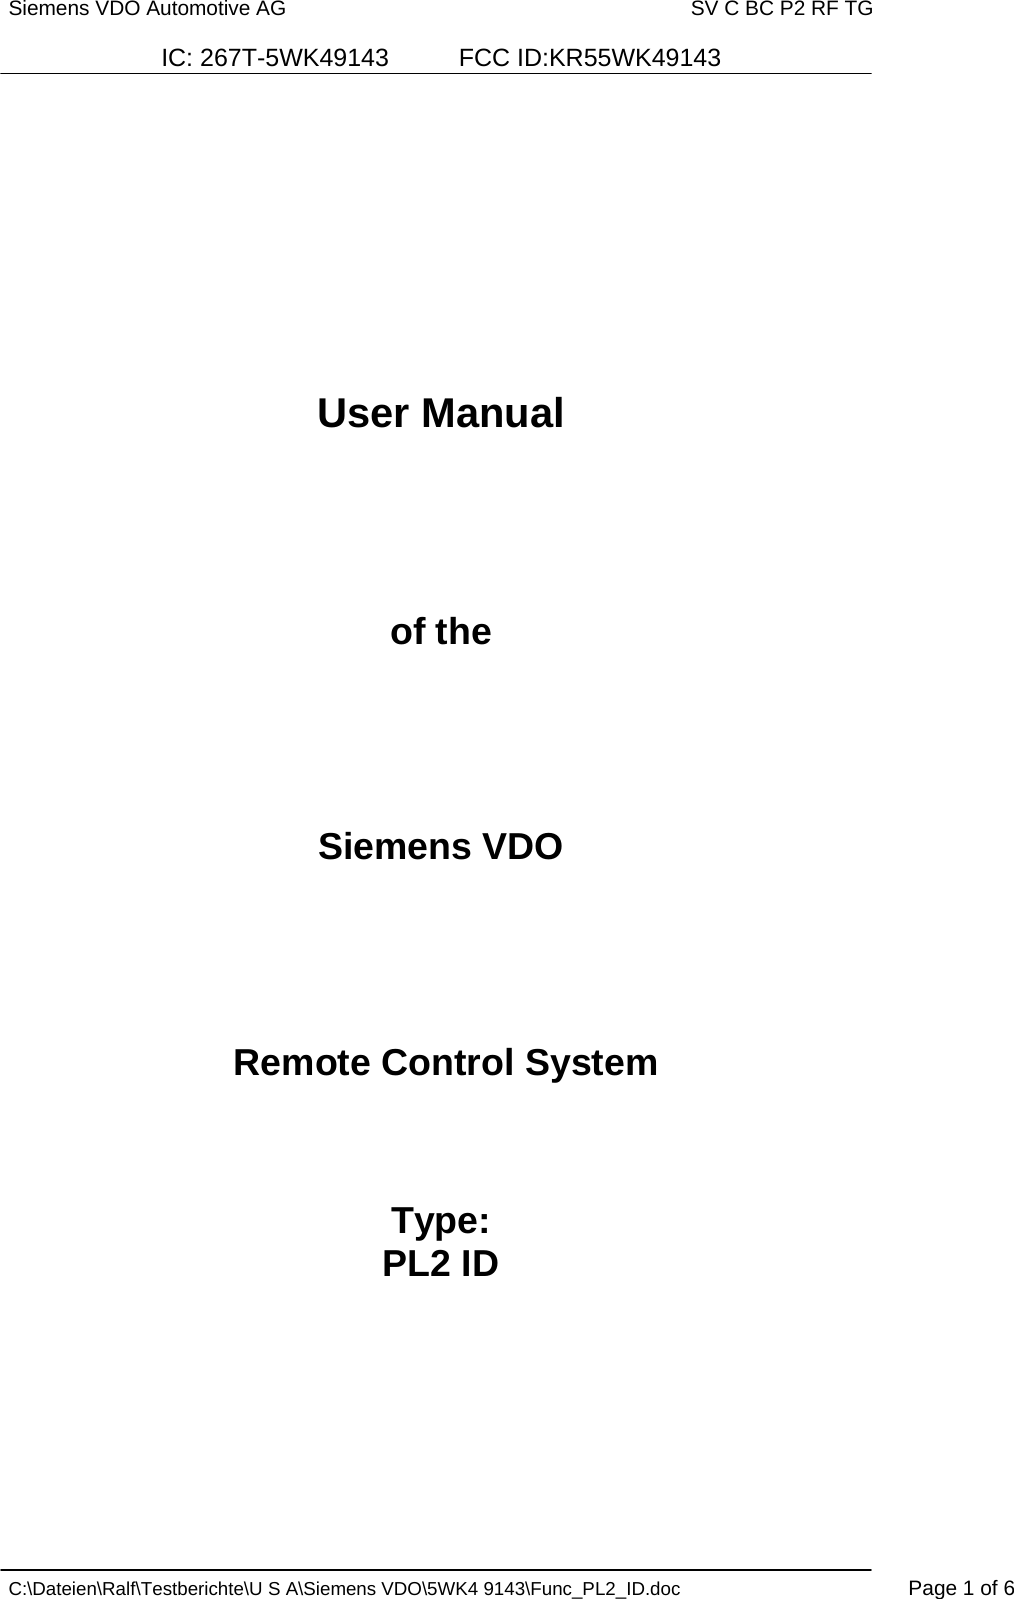 Siemens VDO Automotive AG   SV C BC P2 RF TG  IC: 267T-5WK49143          FCC ID:KR55WK49143   C:\Dateien\Ralf\Testberichte\U S A\Siemens VDO\5WK4 9143\Func_PL2_ID.doc  Page 1 of 6       User Manual     of the     Siemens VDO     Remote Control System    Type: PL2 ID         